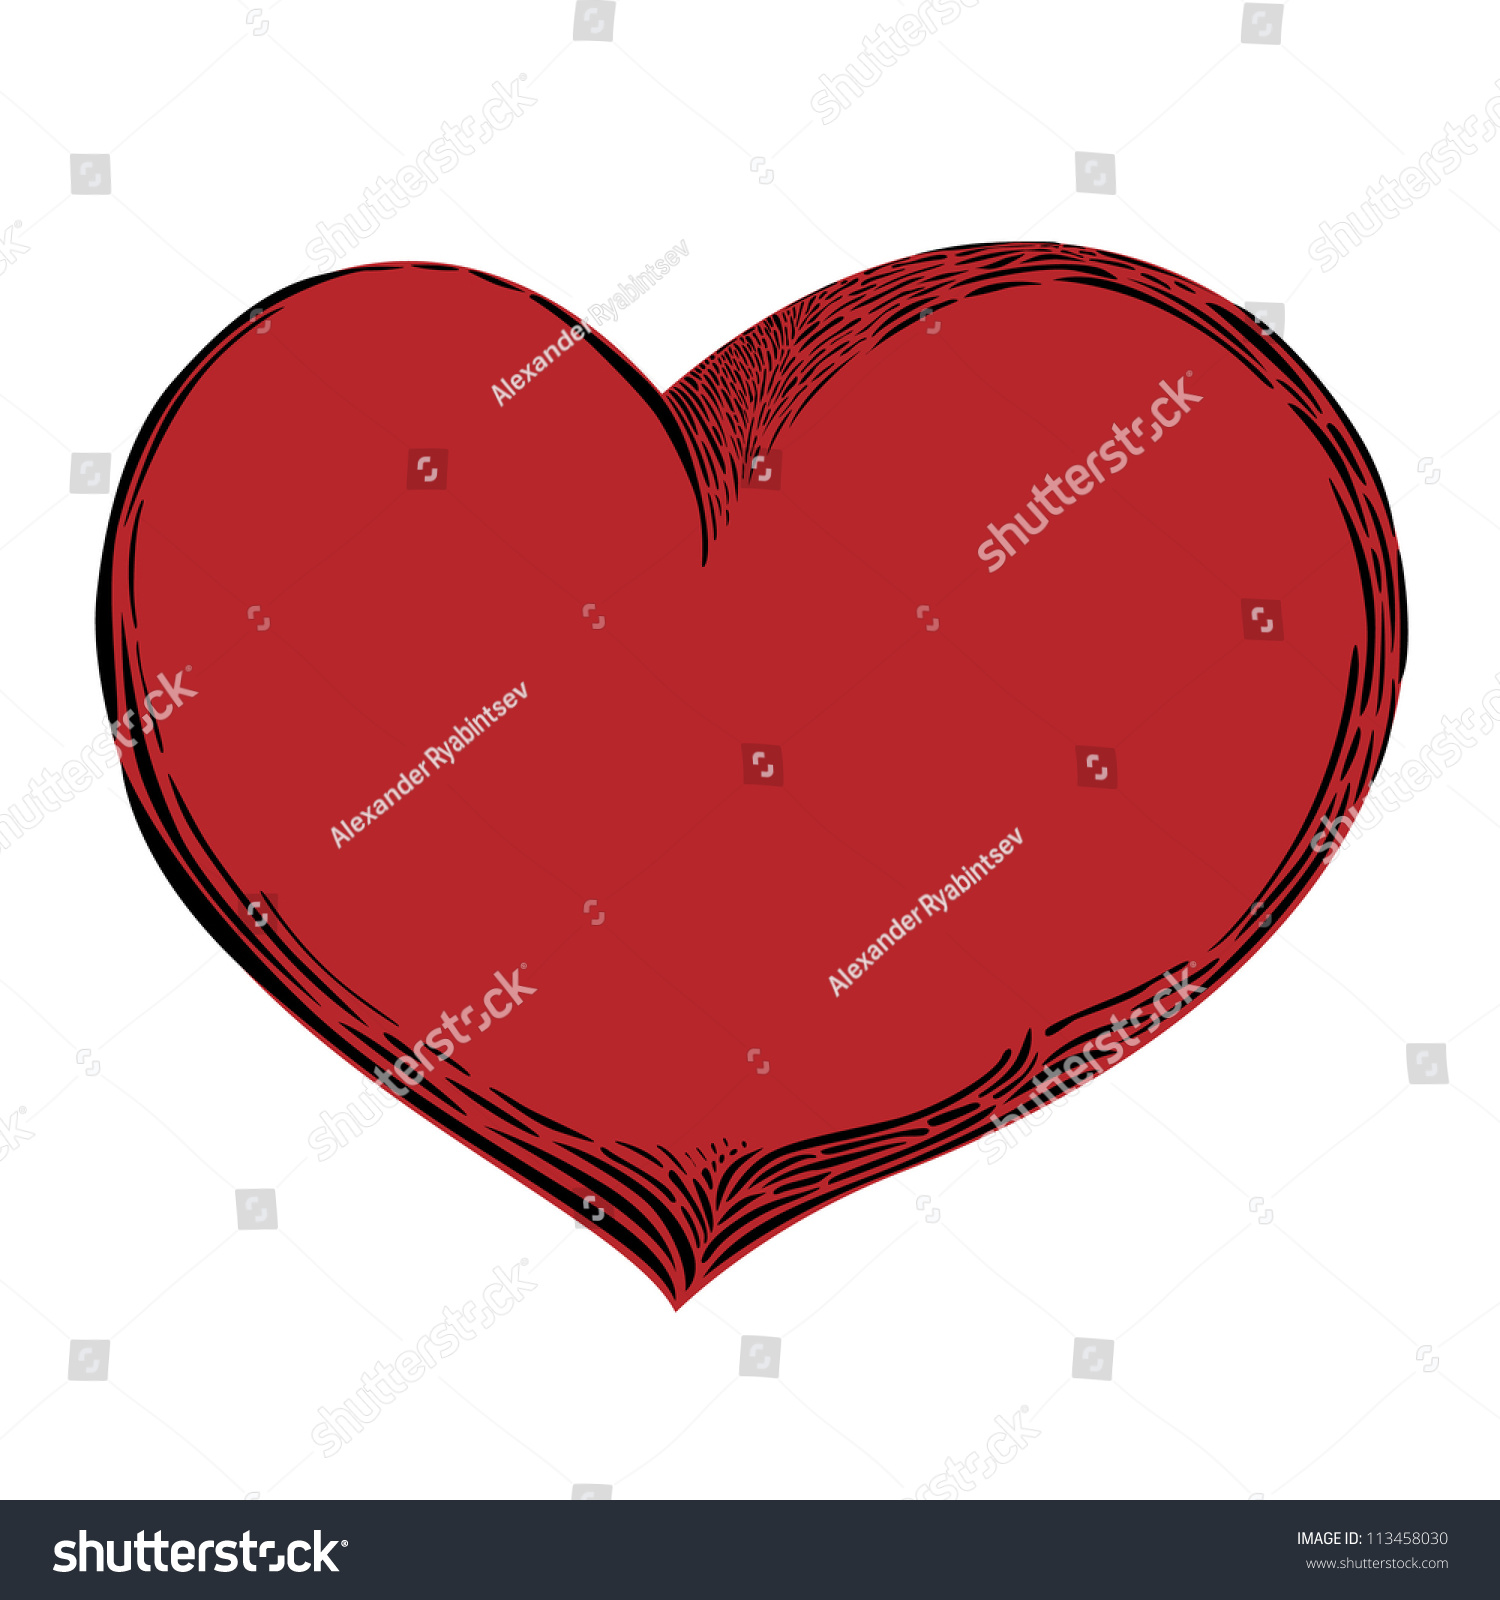 Hand Drawn Heart Stock Vector Illustration 113458030 : Shutterstock